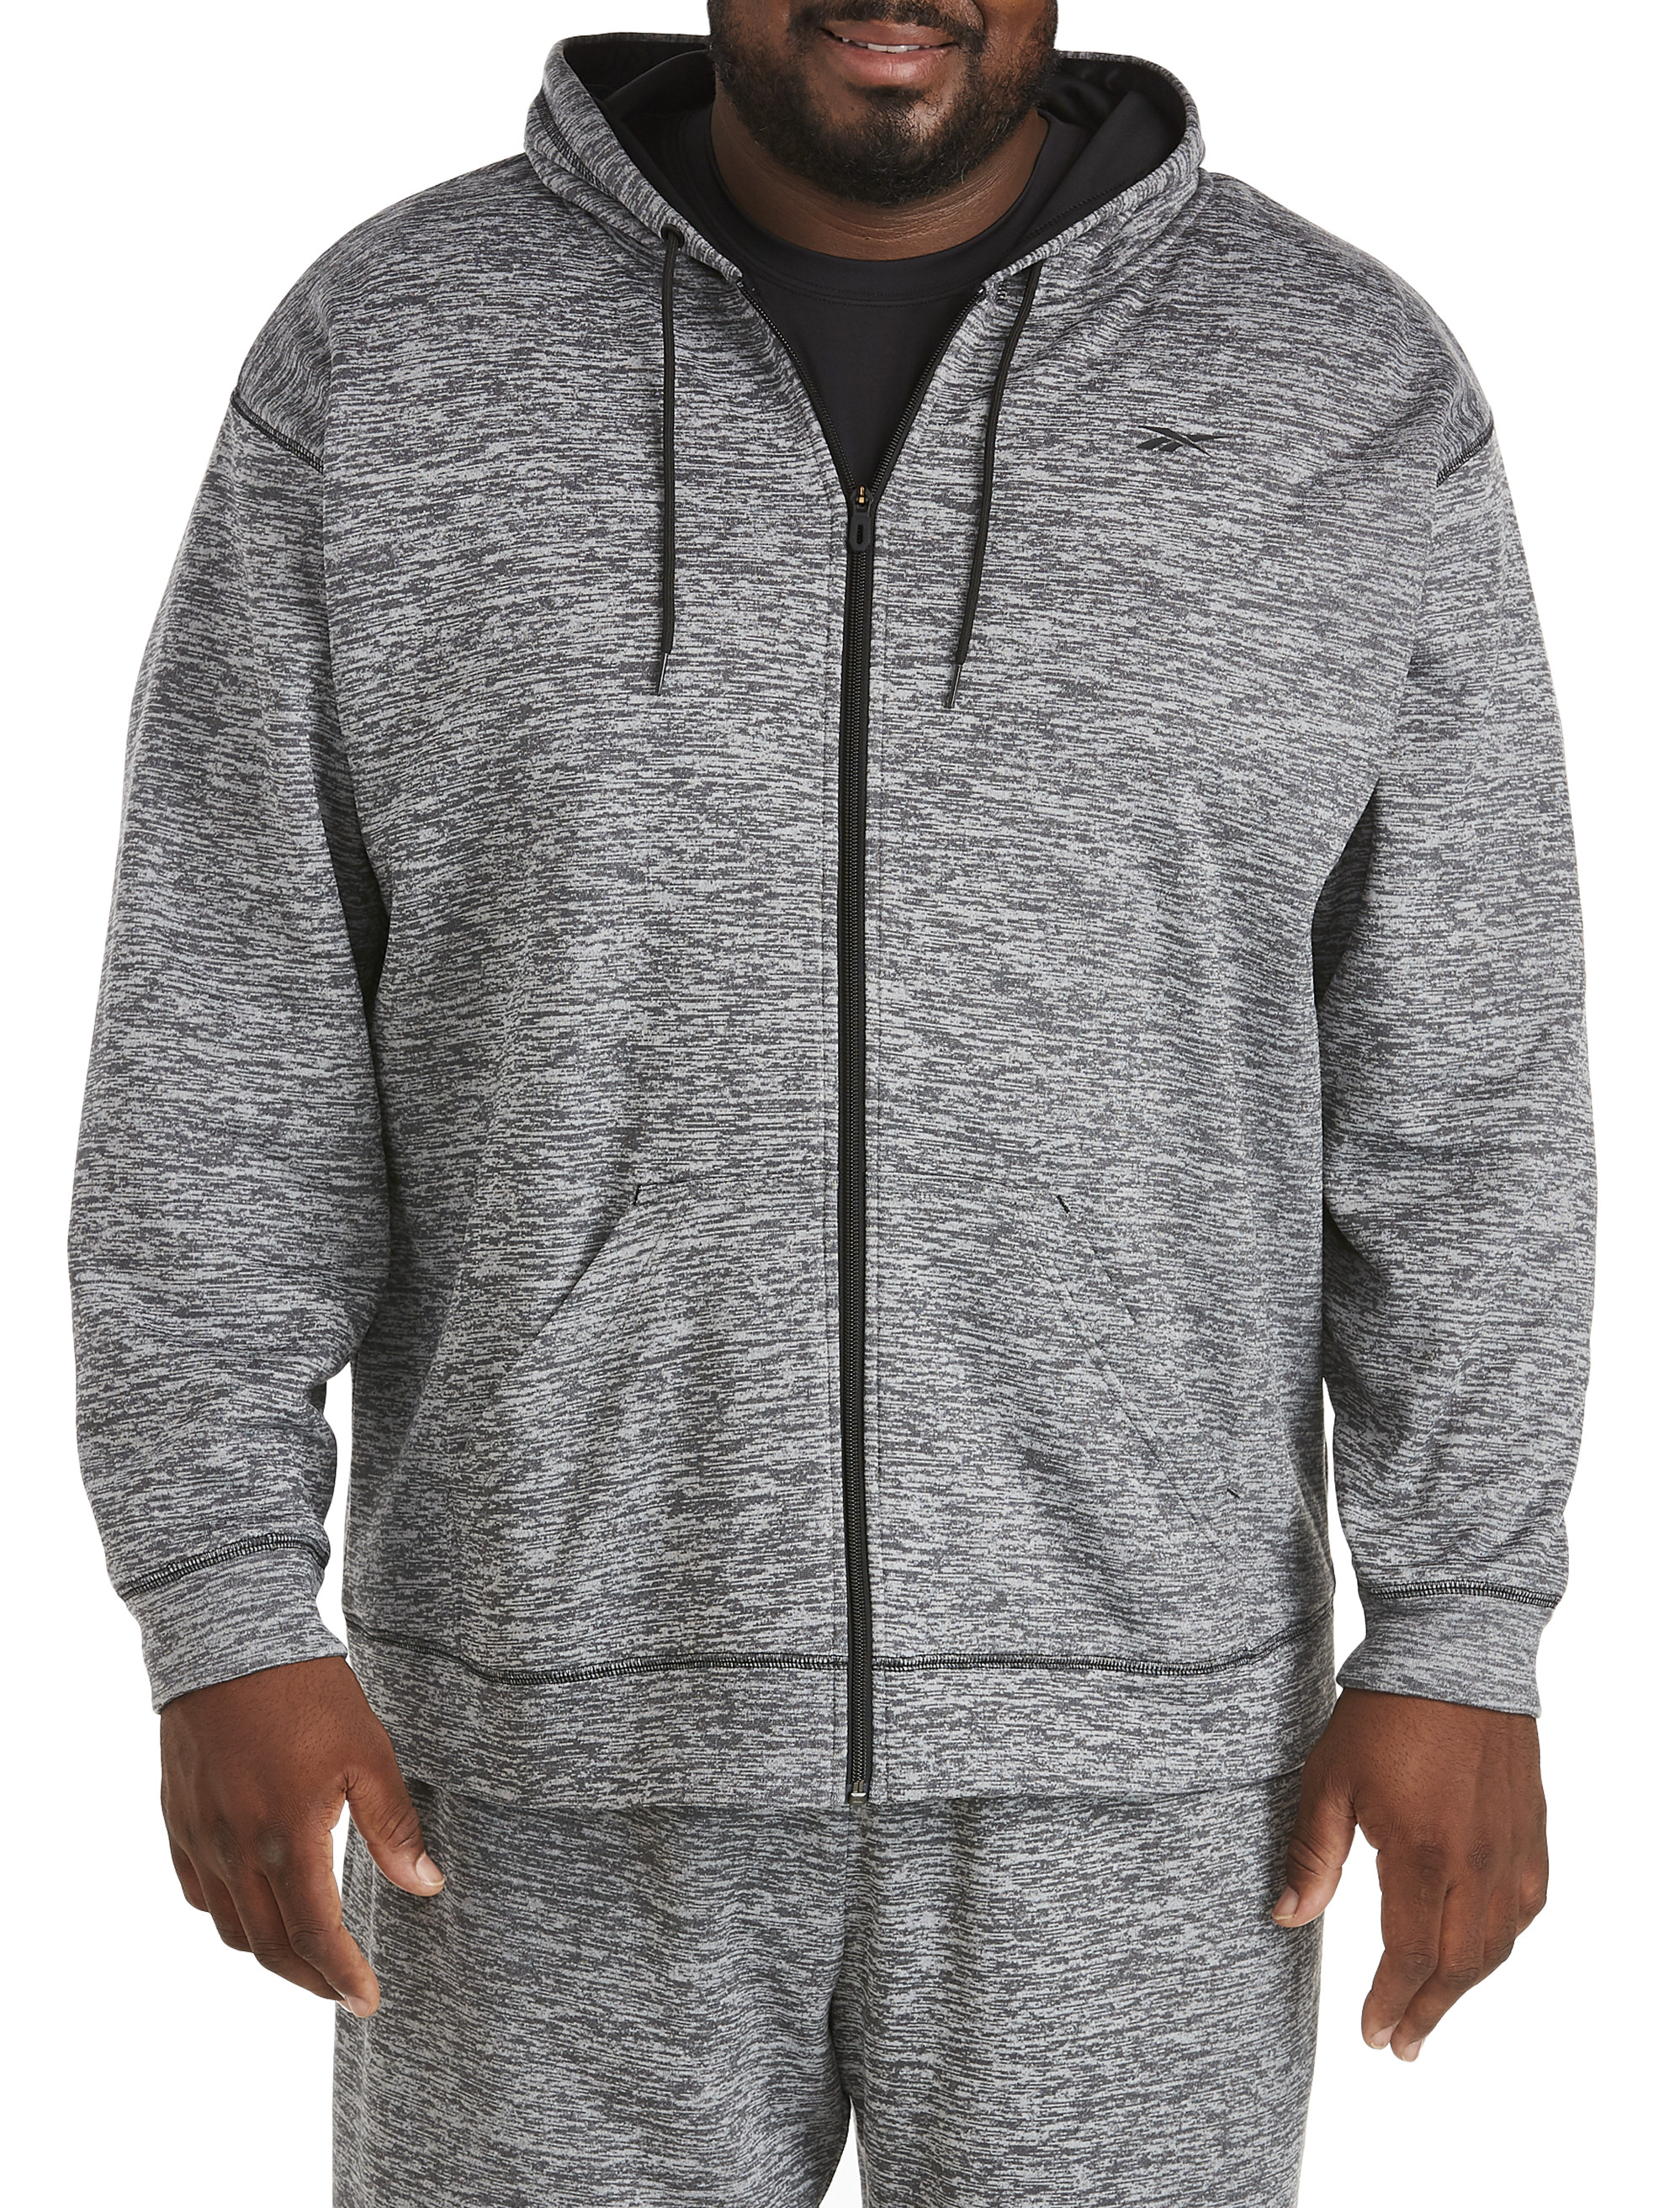 Reebok SpeedWick Full Zip Sweatshirt Grey